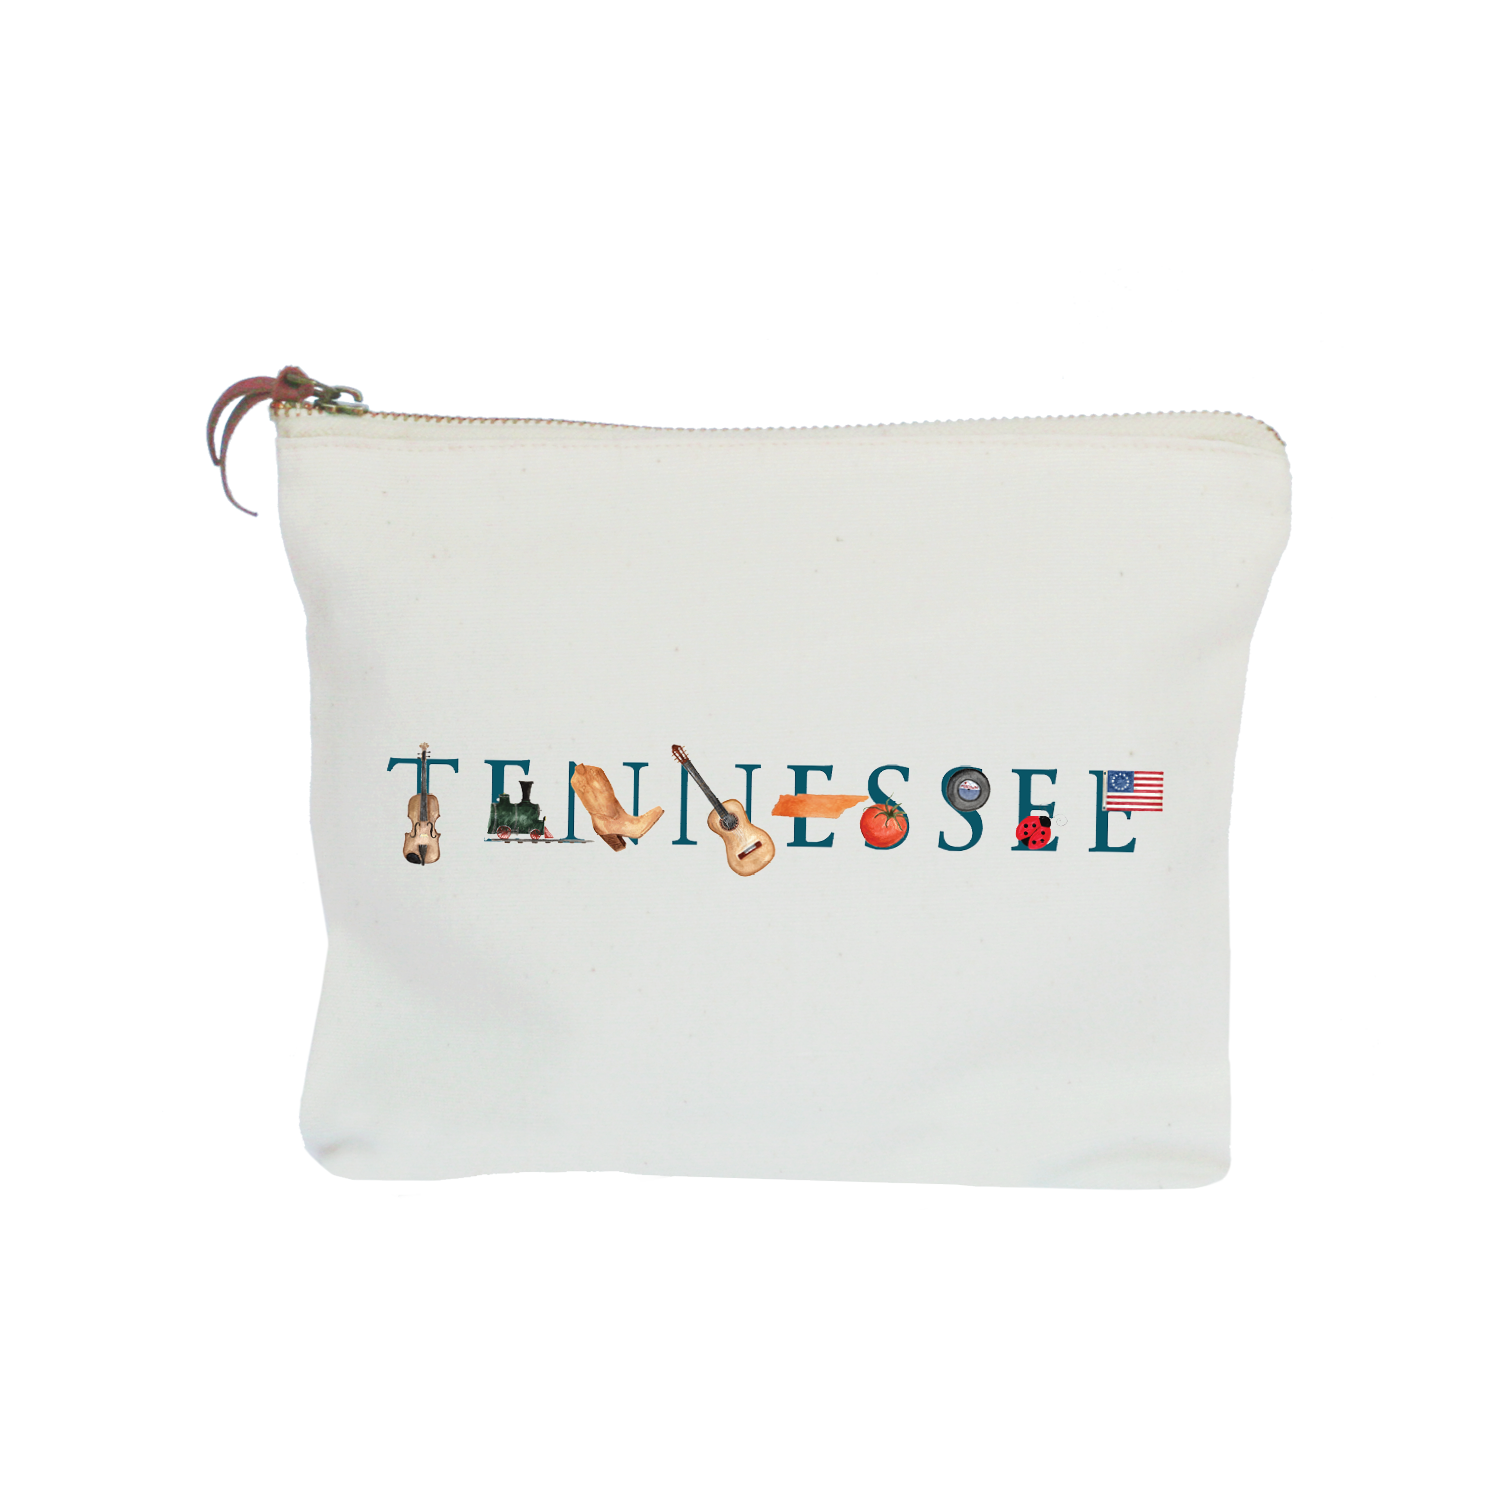 Tennessee zipper pouch